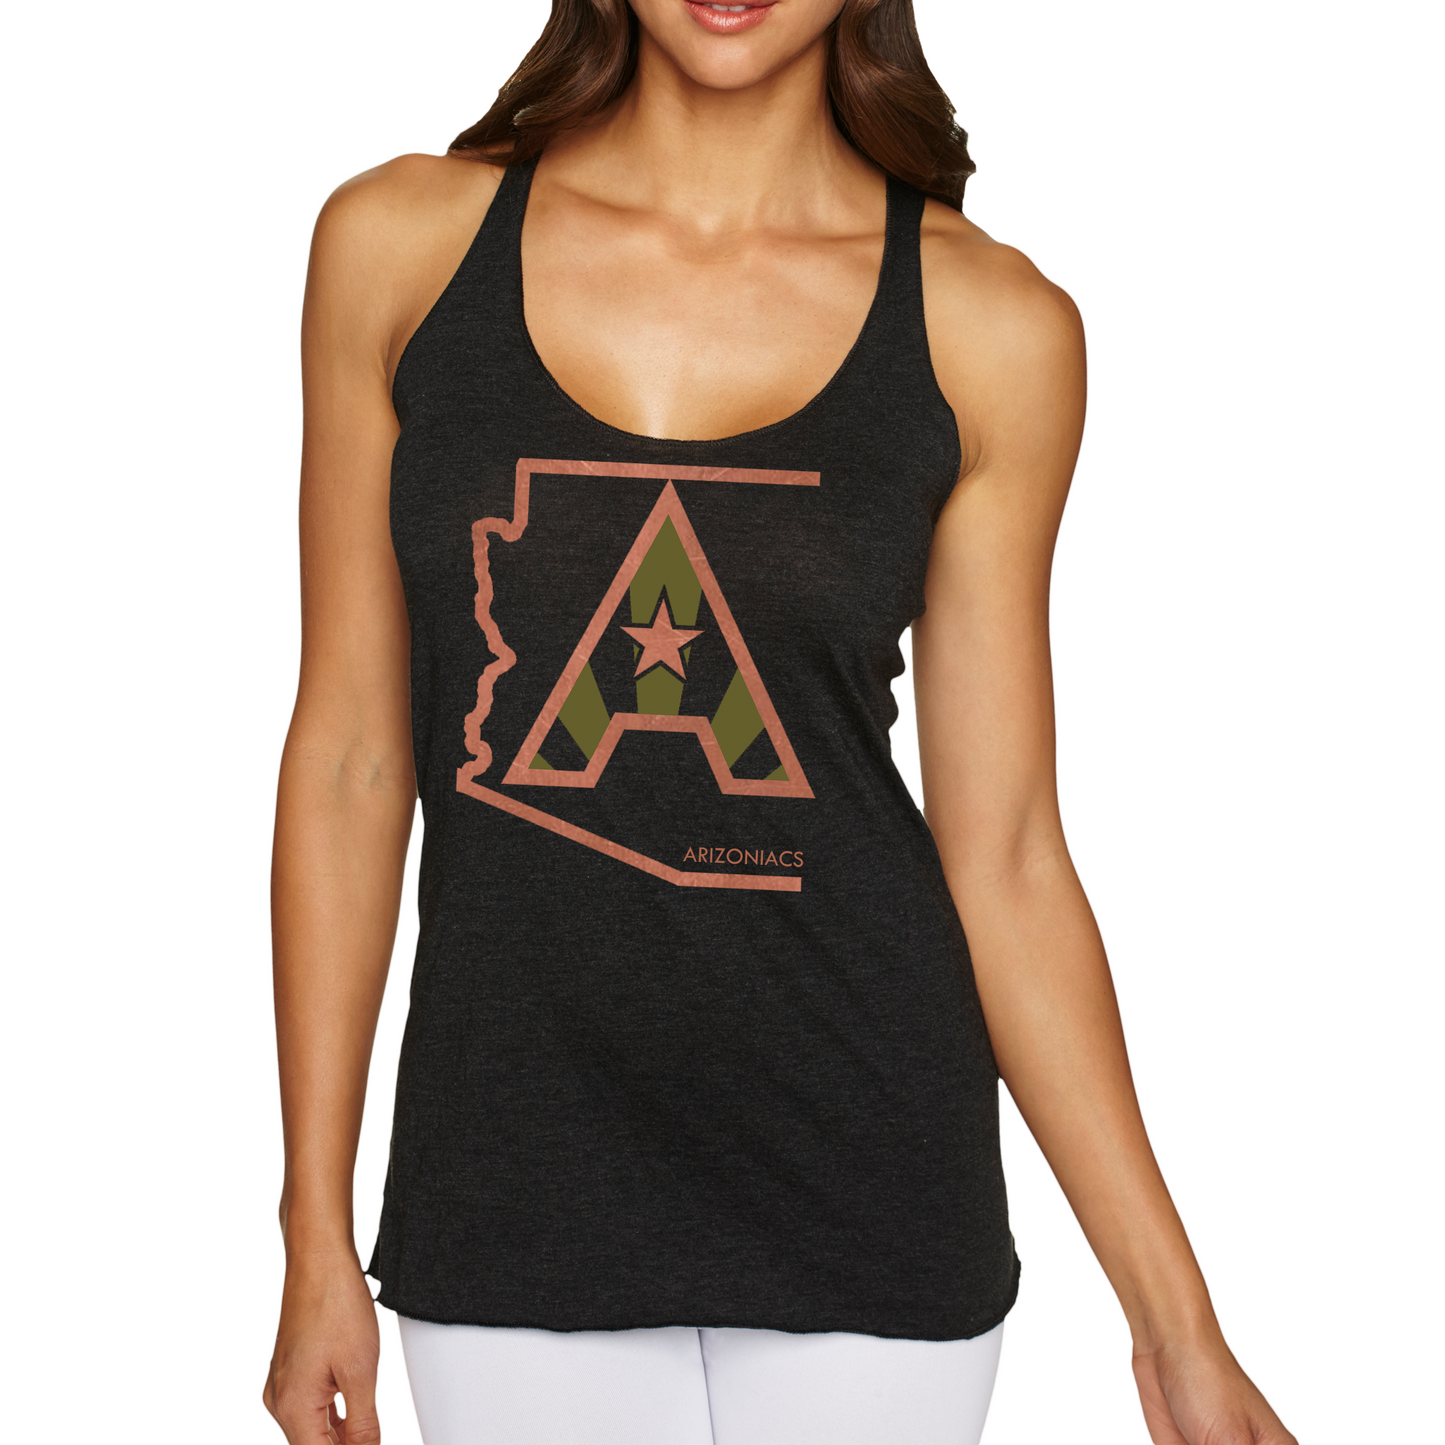 Arizoniacs Logo - Copper and Cactus  Women's Tank